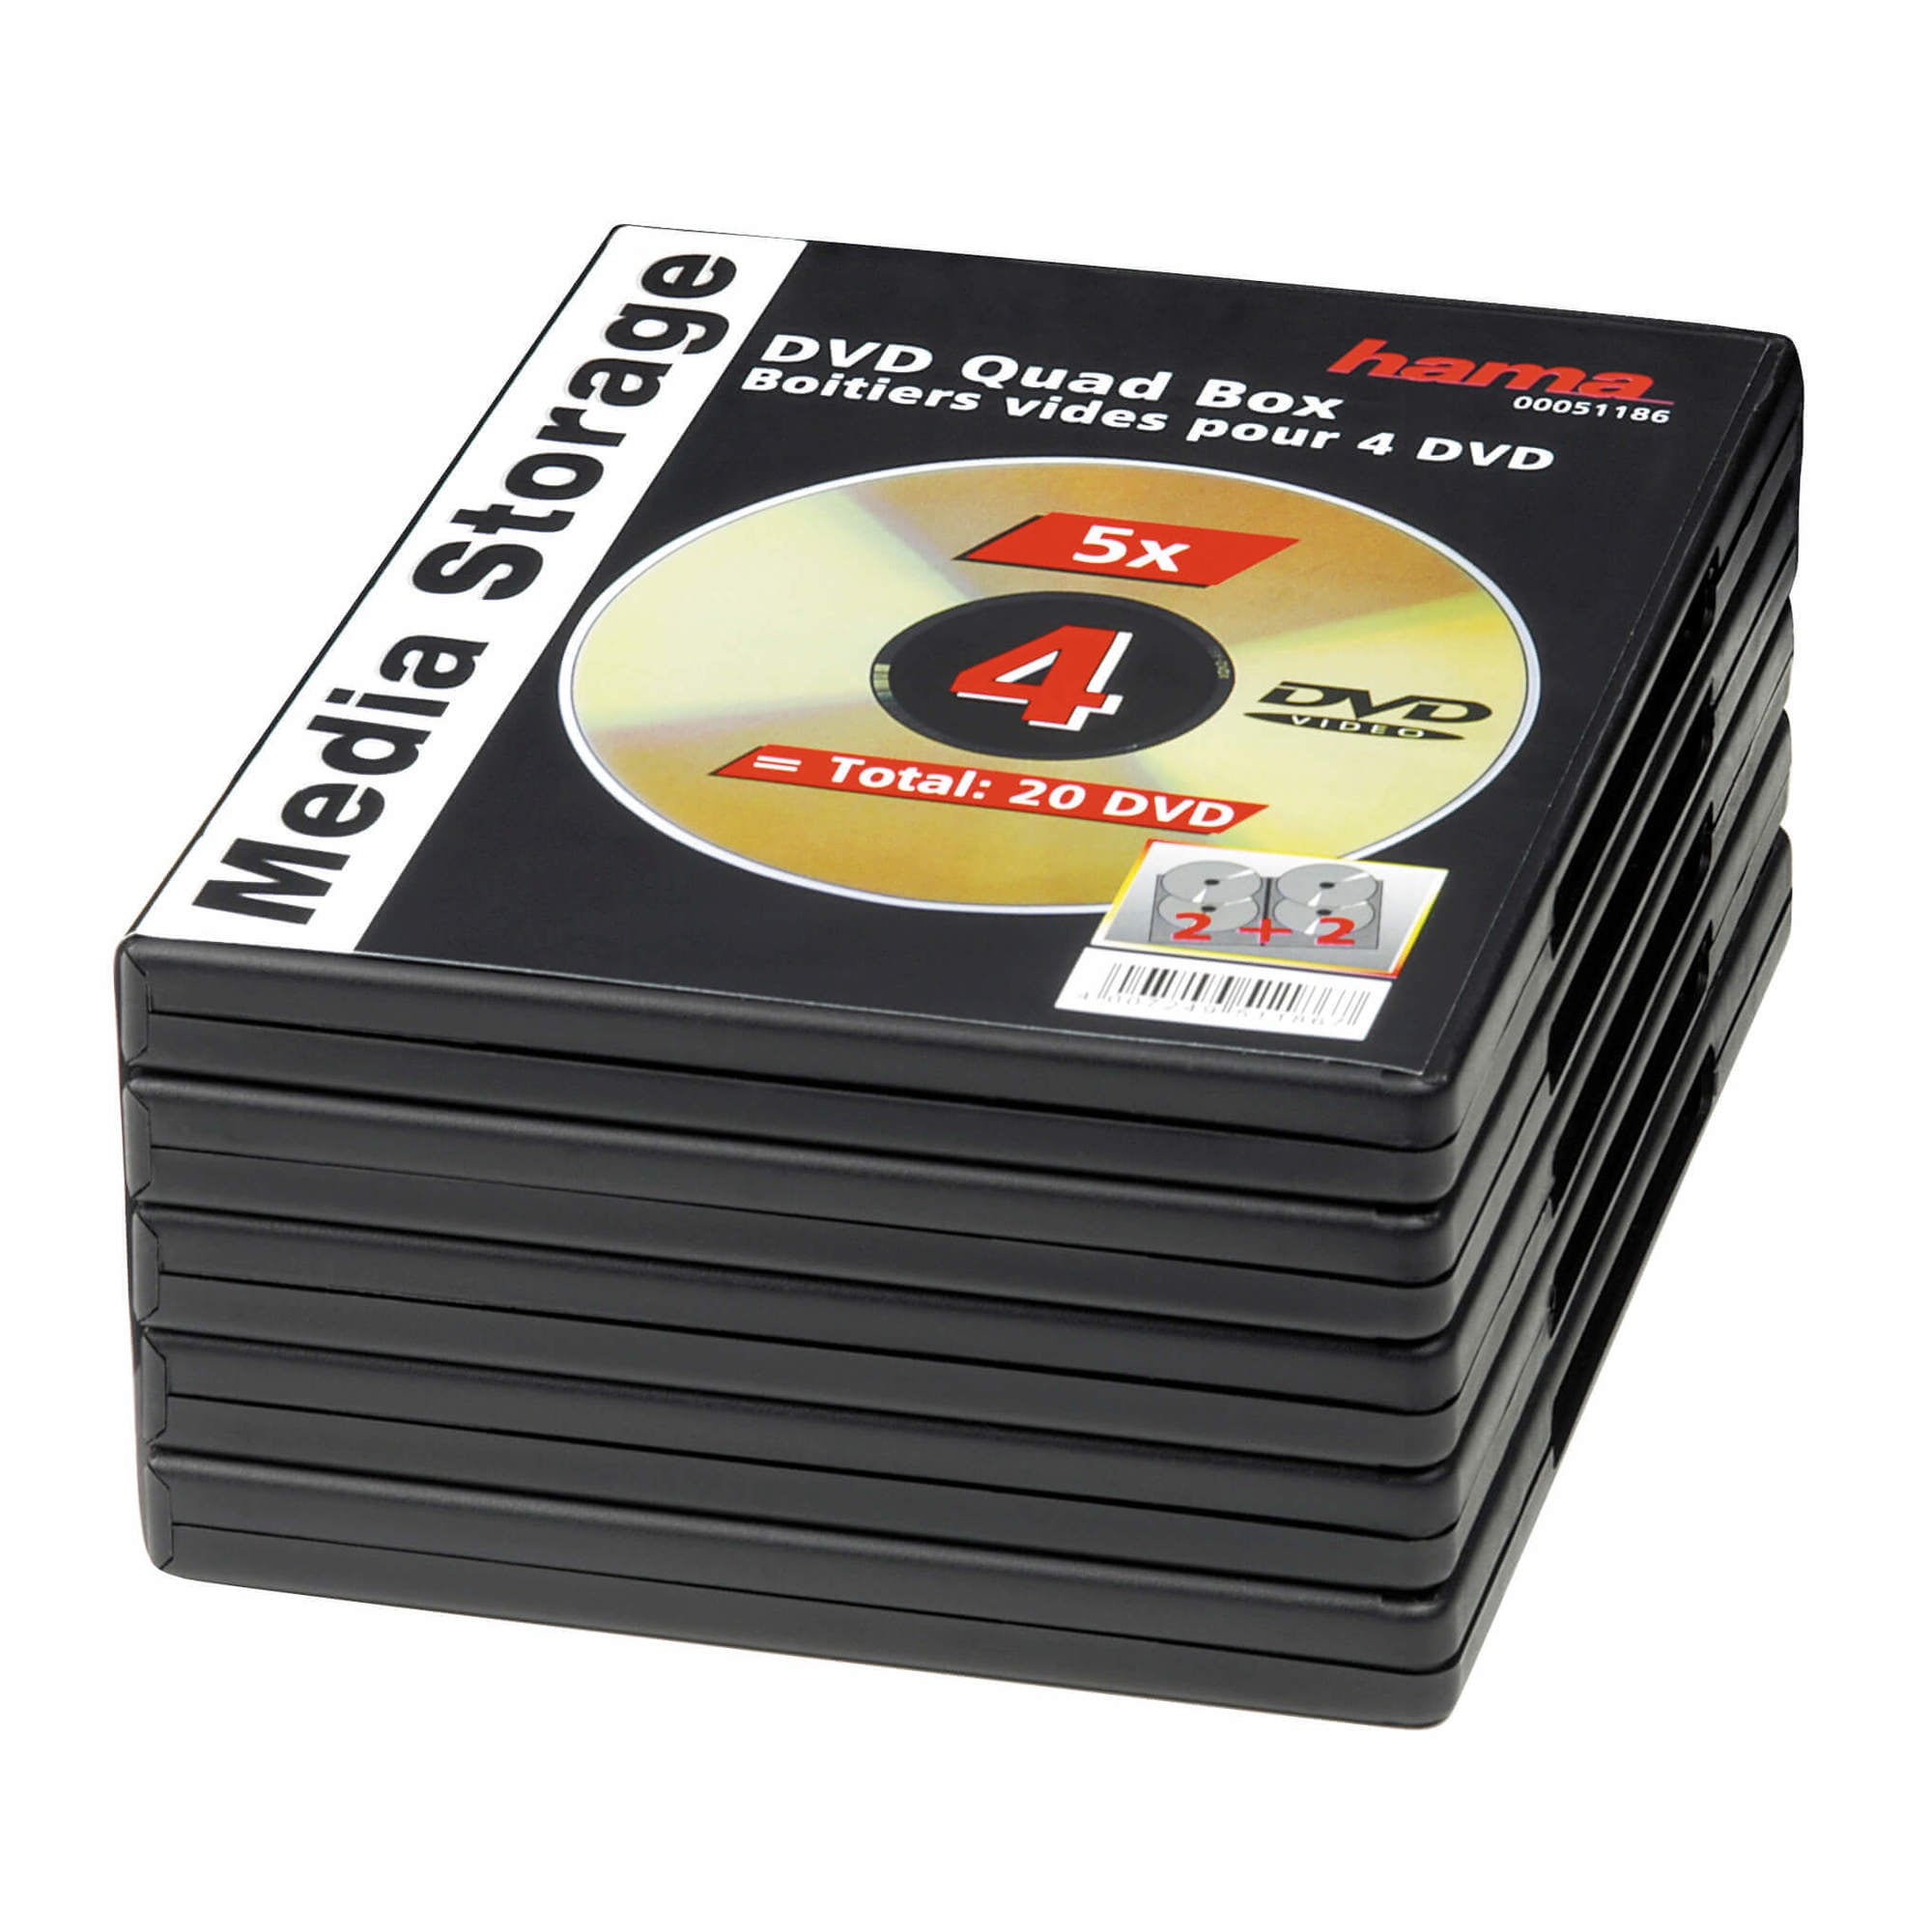 HAMA DVD QUAD BOX 4 DVD BLA.5P - Gigantti verkkokauppa